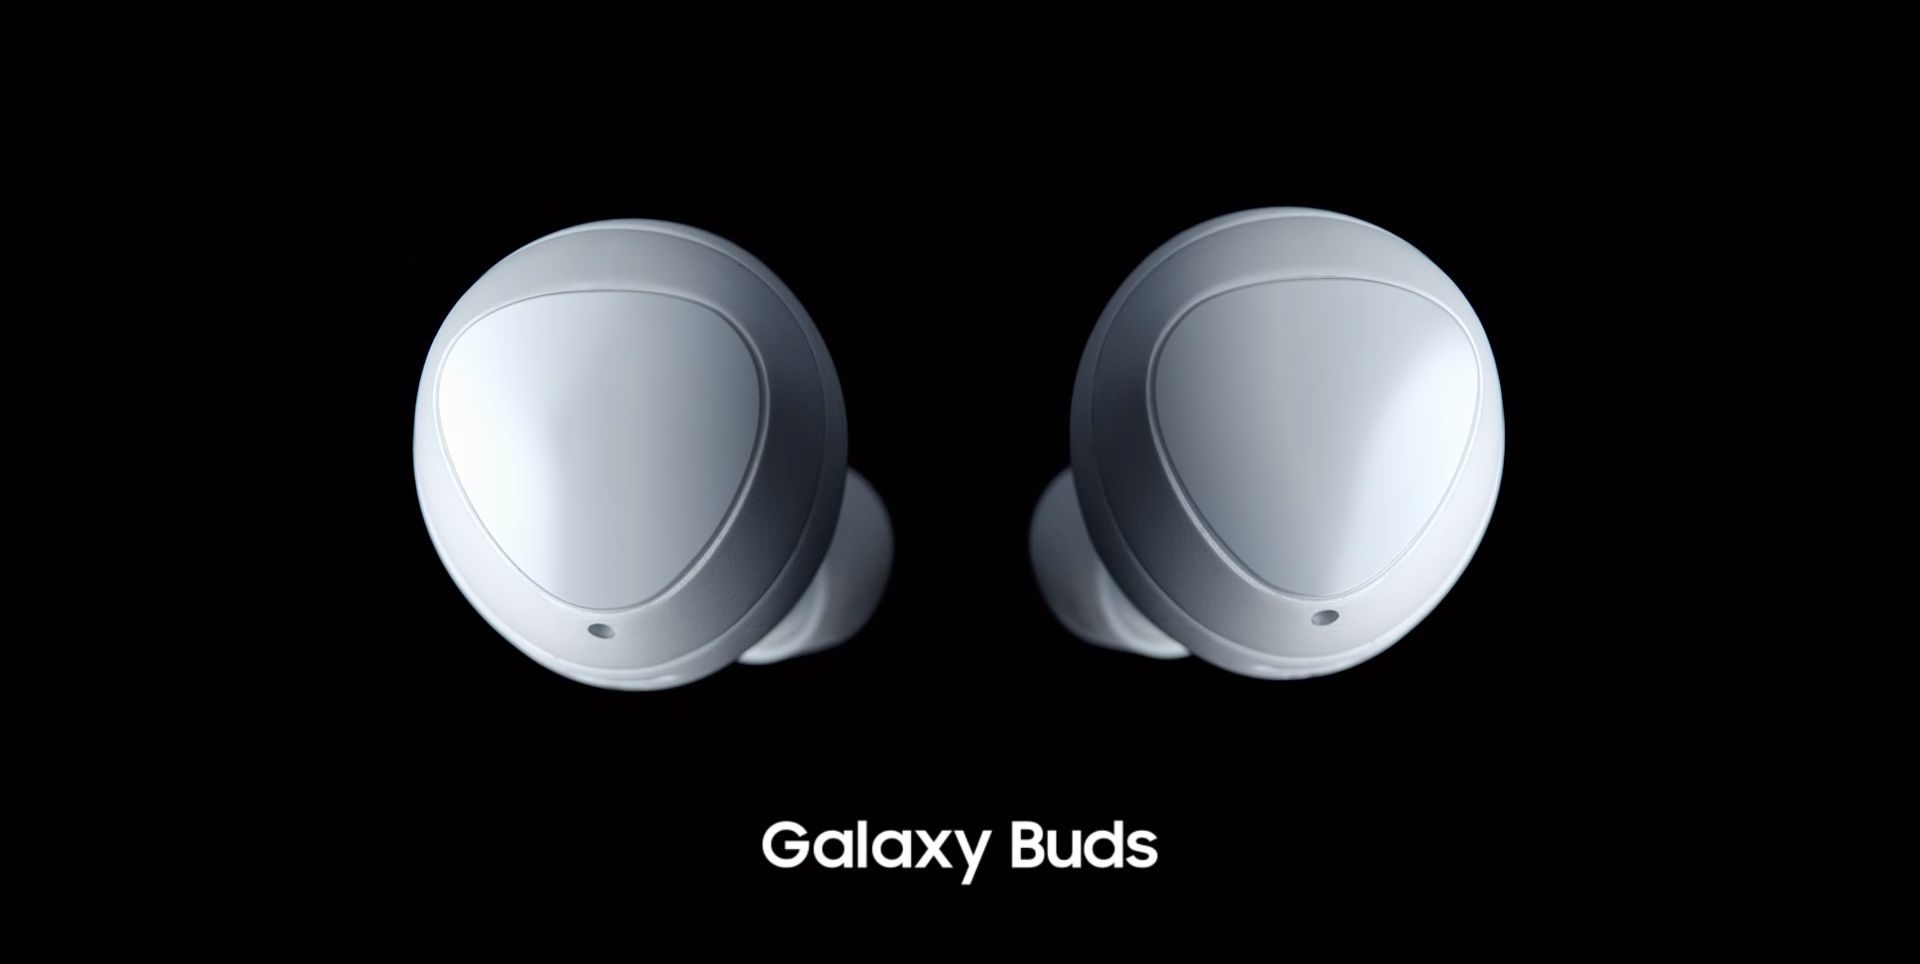 Samsungの完全ワイヤレスイヤホン「Galaxy Buds」の特徴やバッテリーの持続時間について